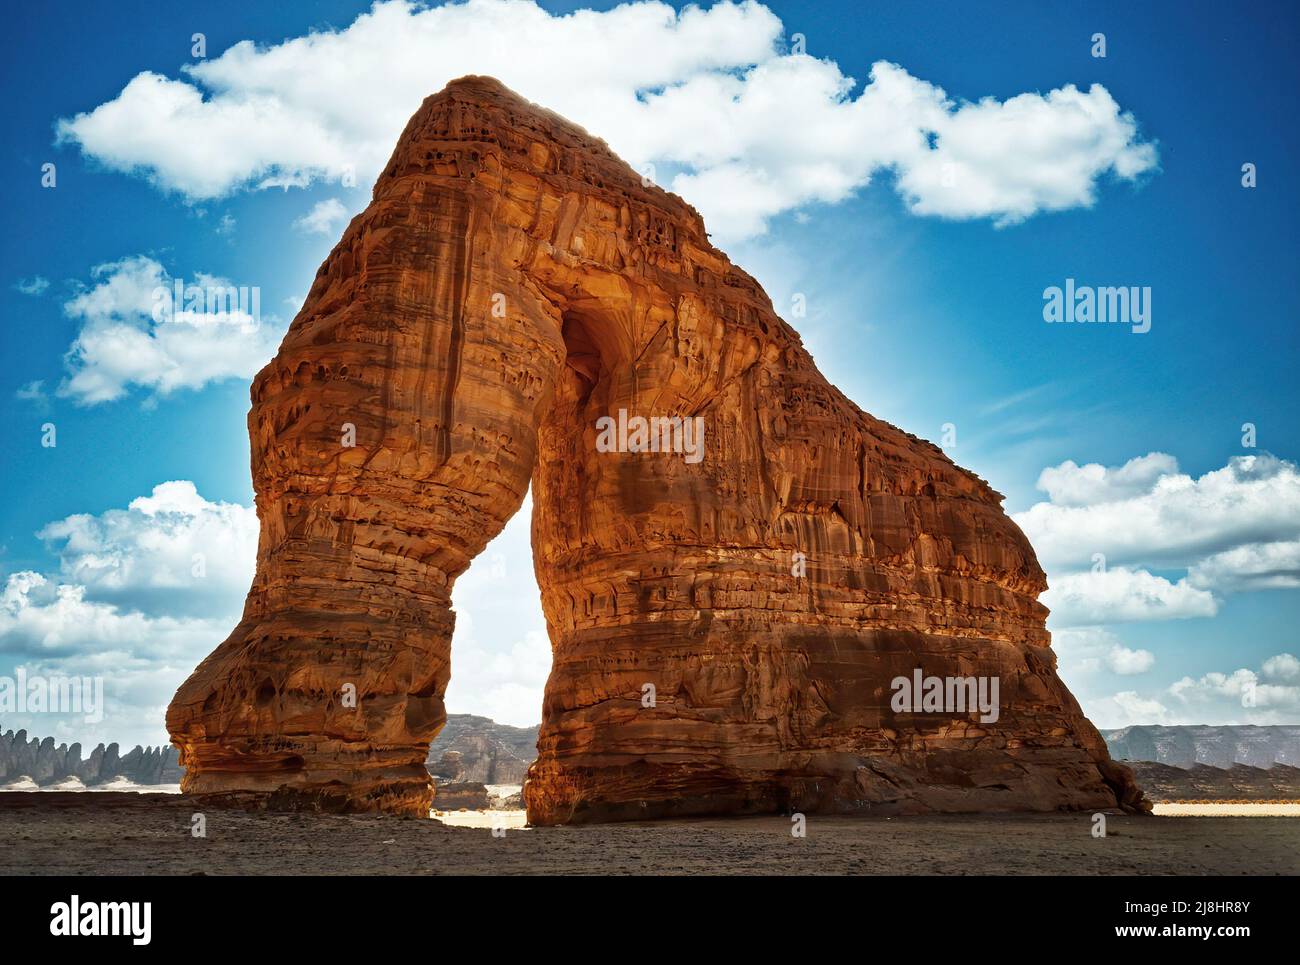 Famoso Elephant rock en Al-Ula, Arabia Saudita. Foto de stock